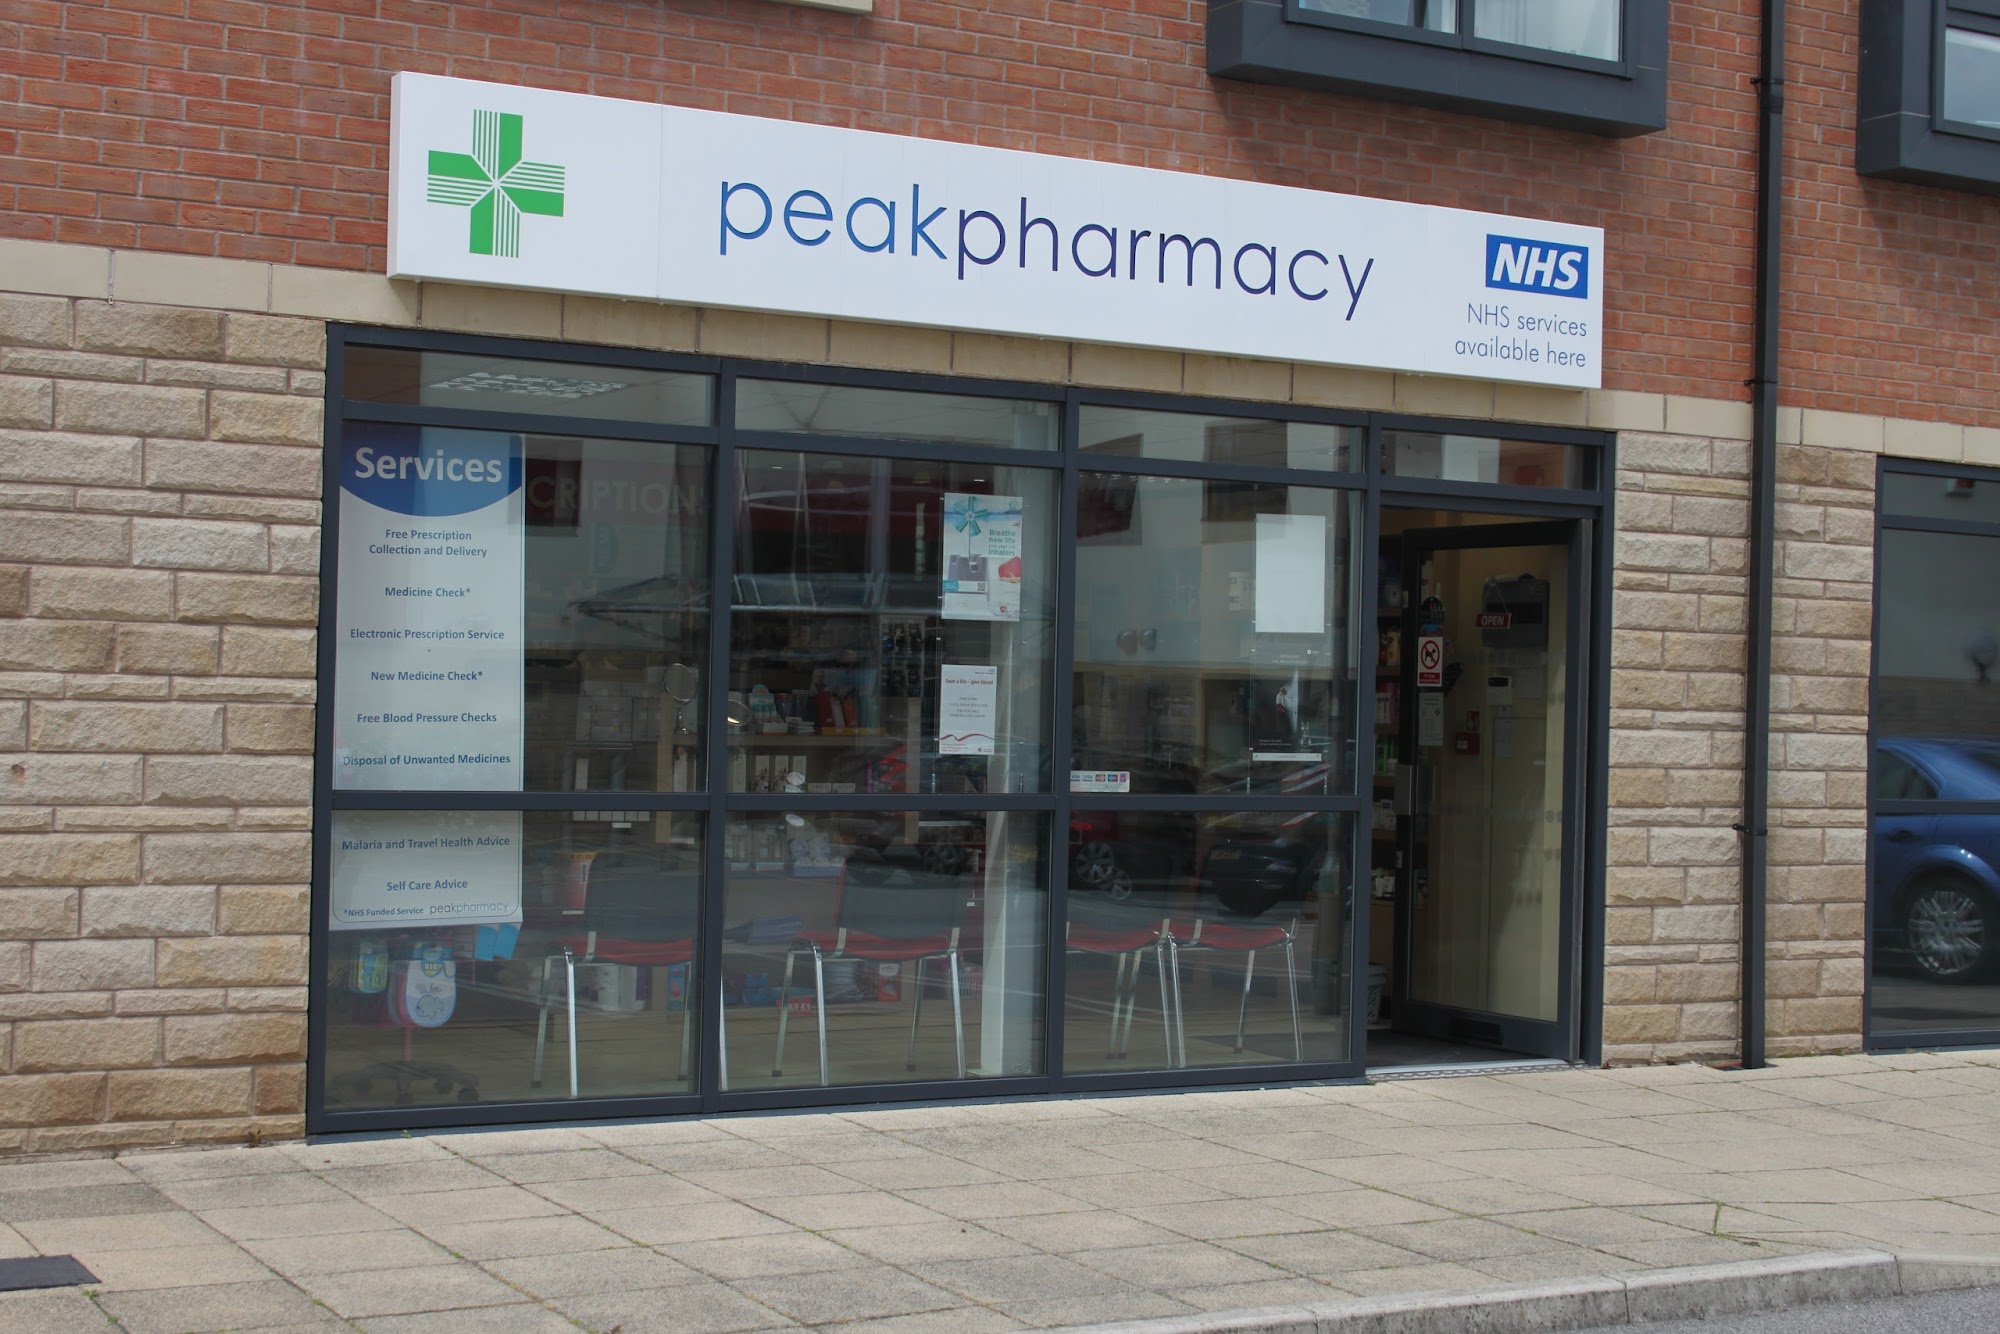 Peak pharmacy